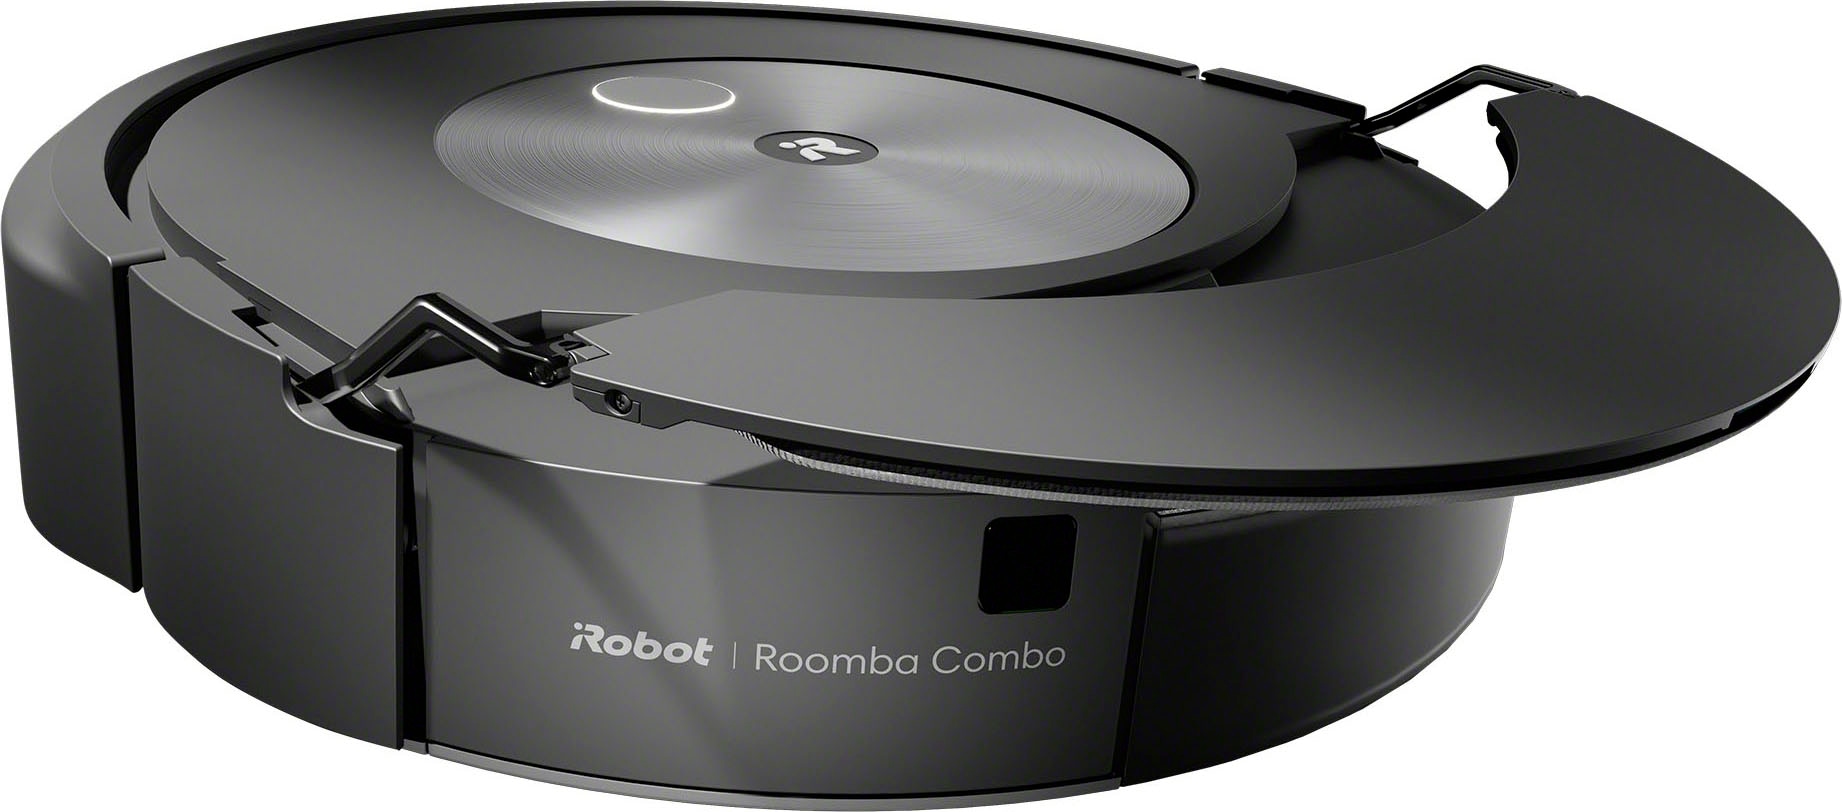 »Roomba Combo iRobot Saugroboter kaufen (c715840)«, Wischroboter j7 und Saug-